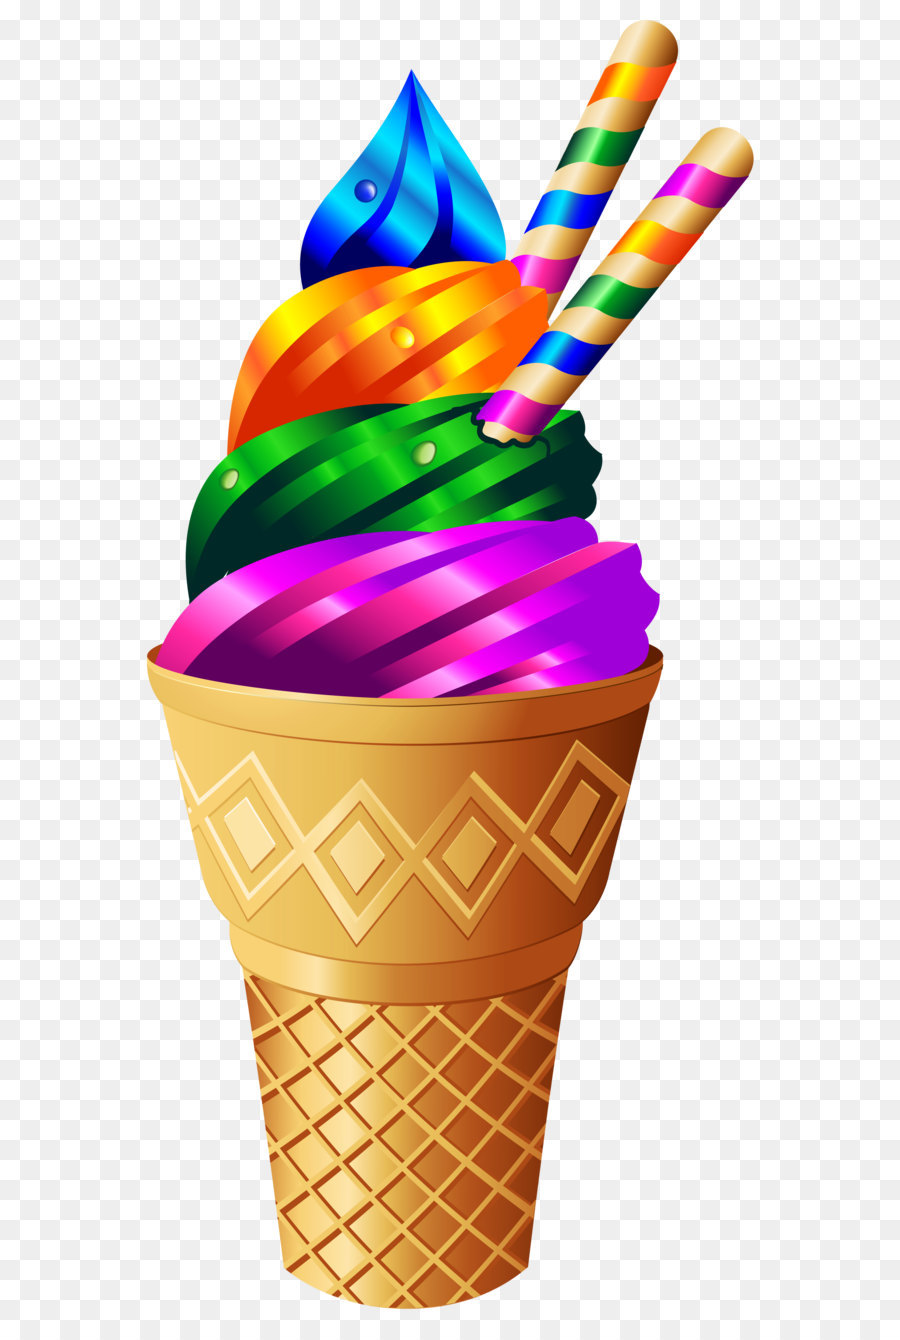 Ice cream cake Sundae Cupcake - Transparent Rainbow Ice Cream PNG Image png download - 2208*4548 - Free Transparent Ice Cream png Download.